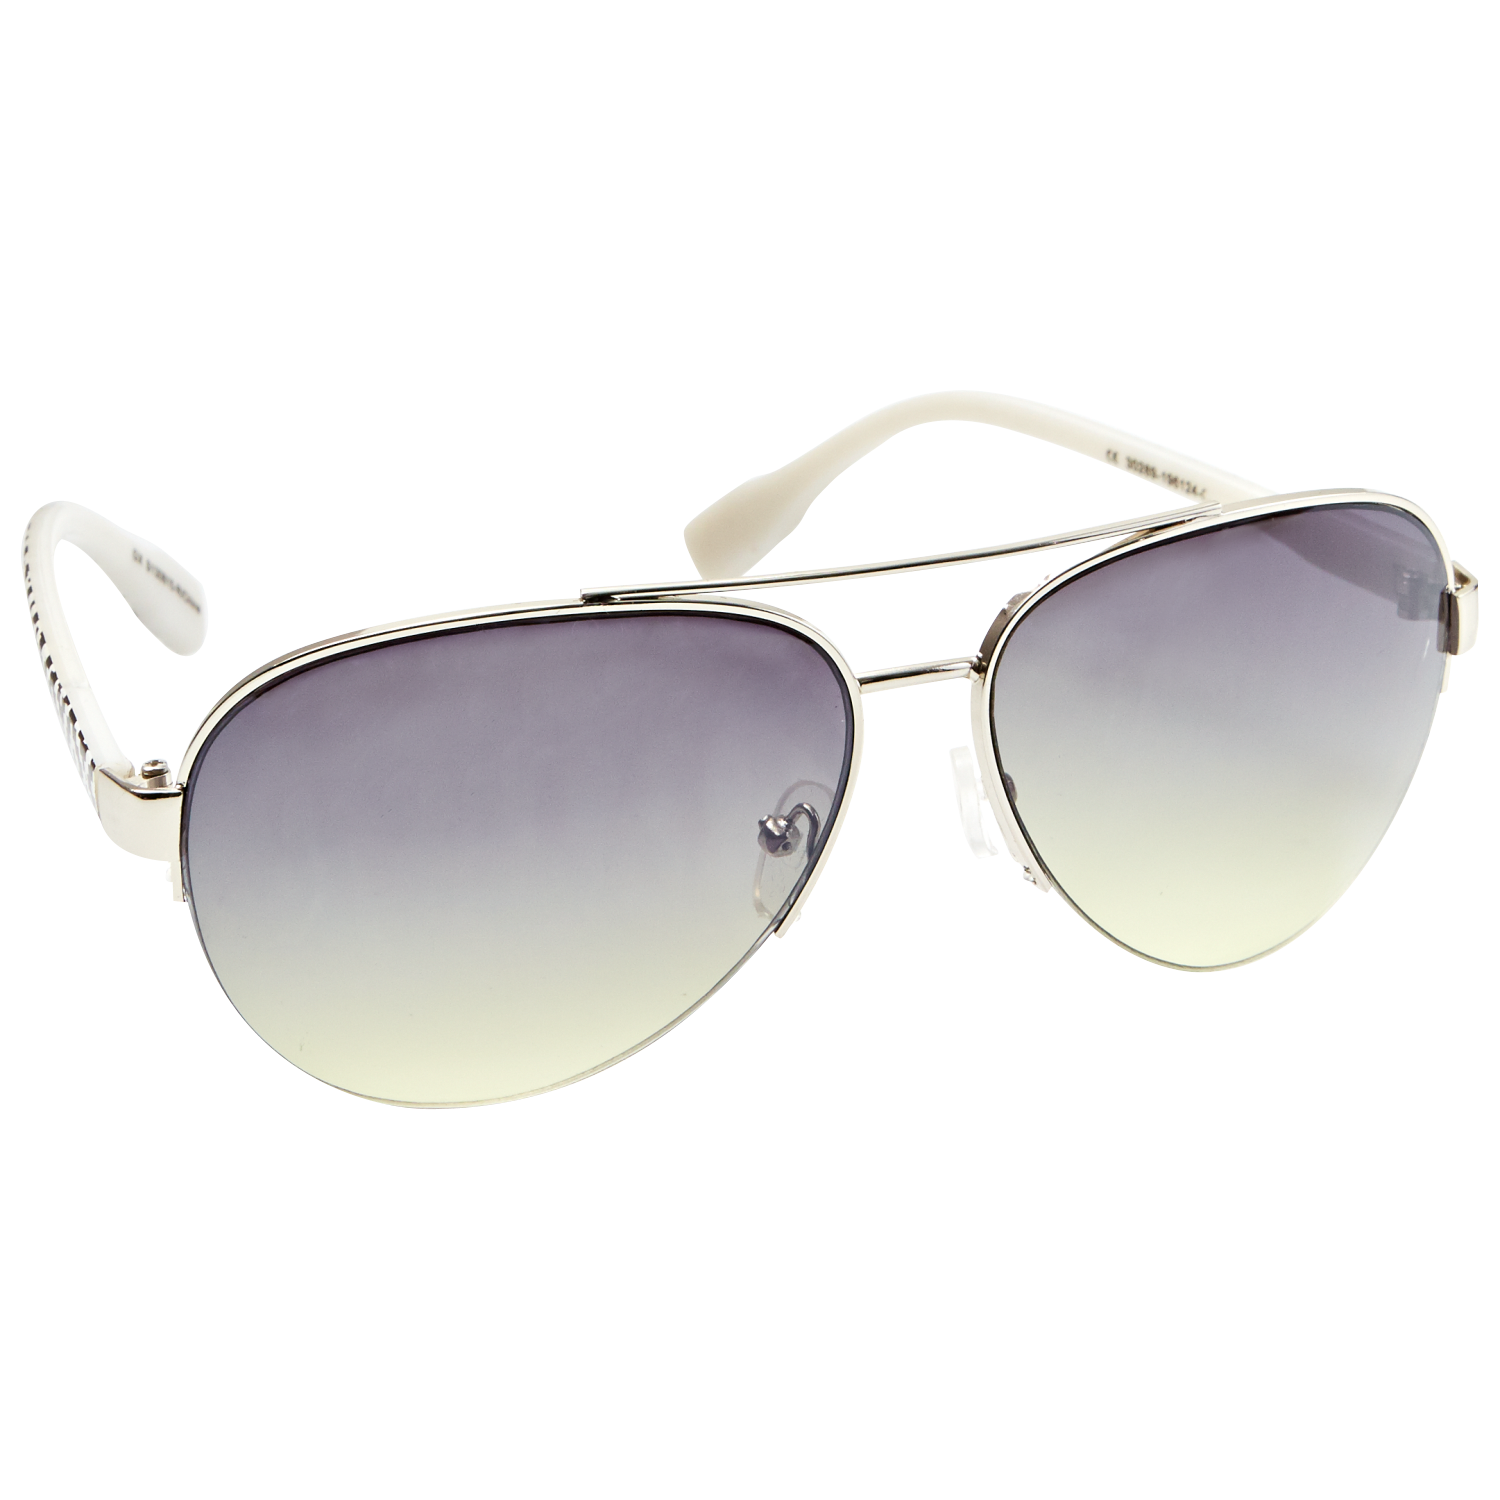 Sunglasses Silhouette Goggles Oakley, Inc. - sunglasses png download ...